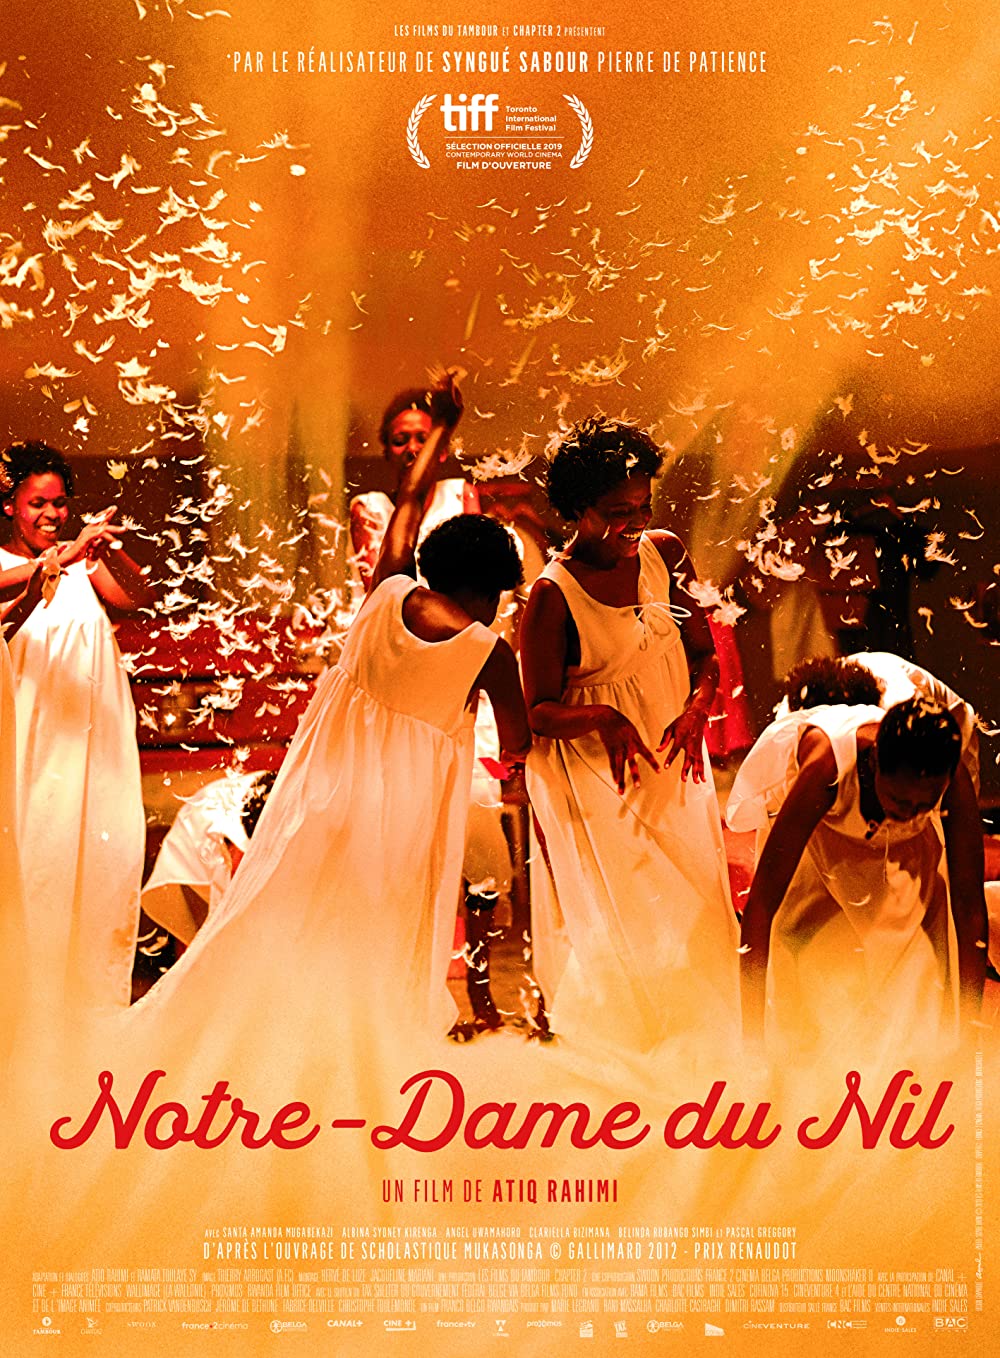 Filmbeschreibung zu Notre-Dame du Nil